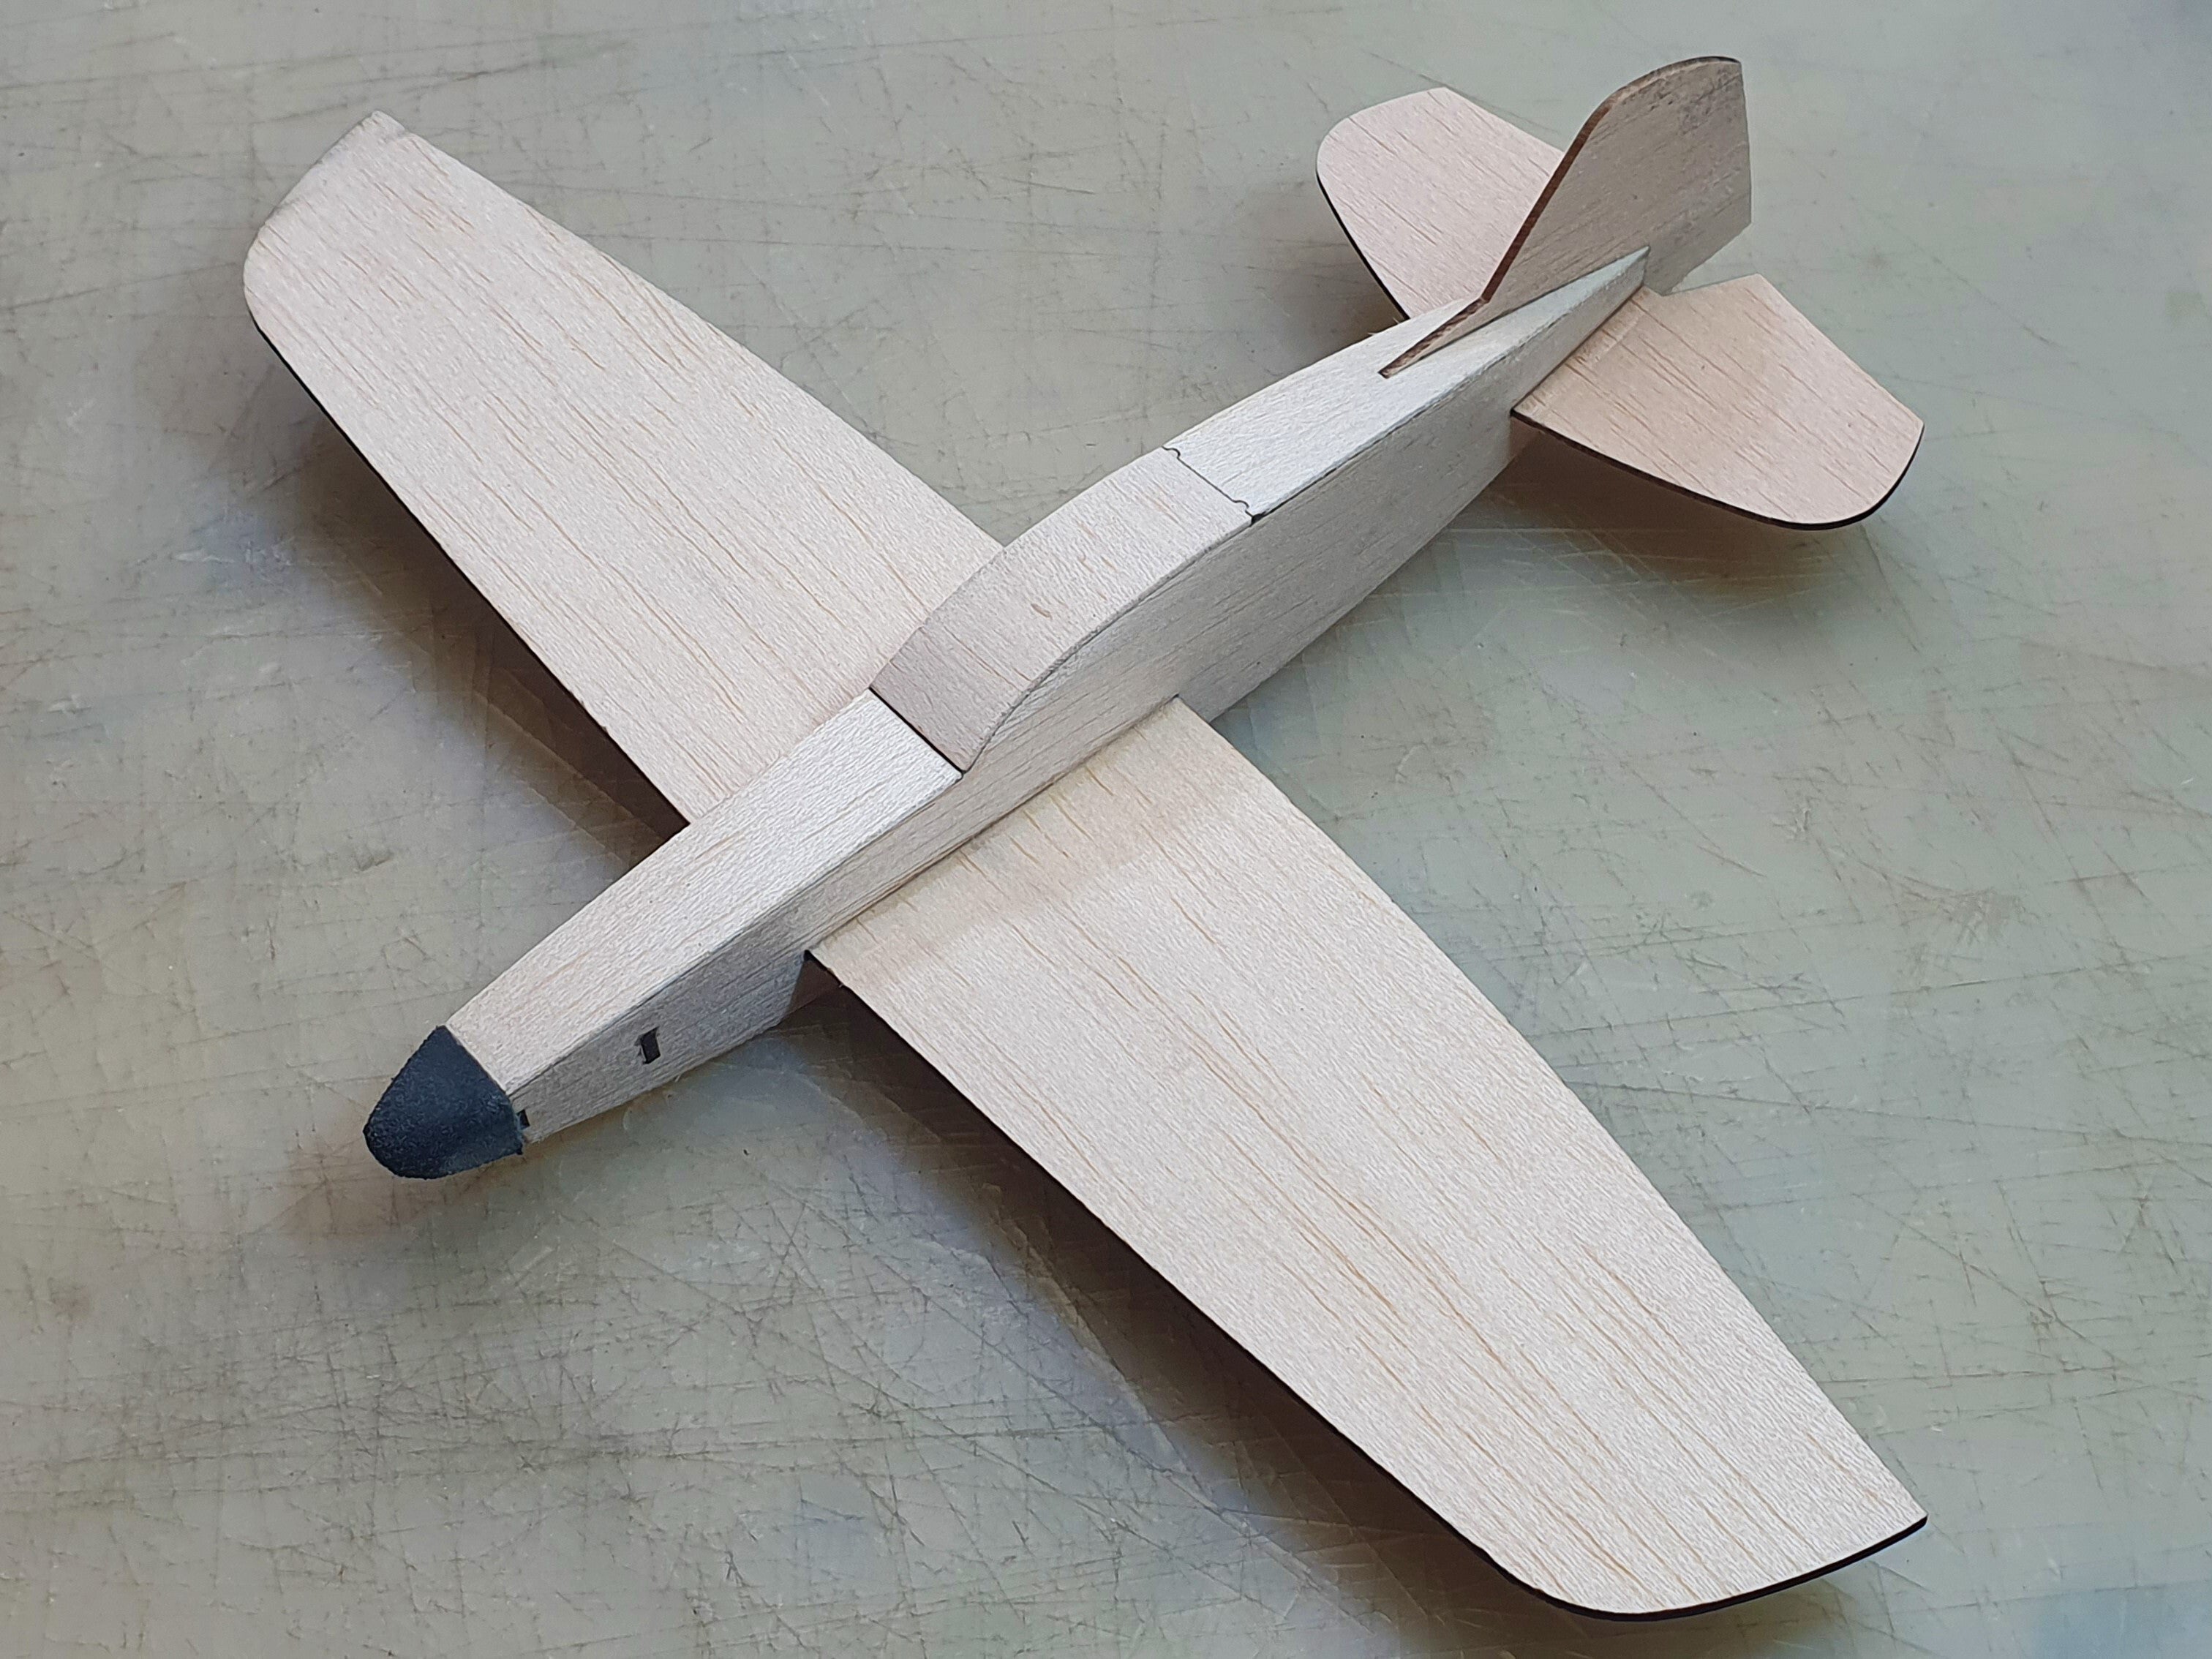 Weekndr Project: How to Make a Balsa Wood Airplane